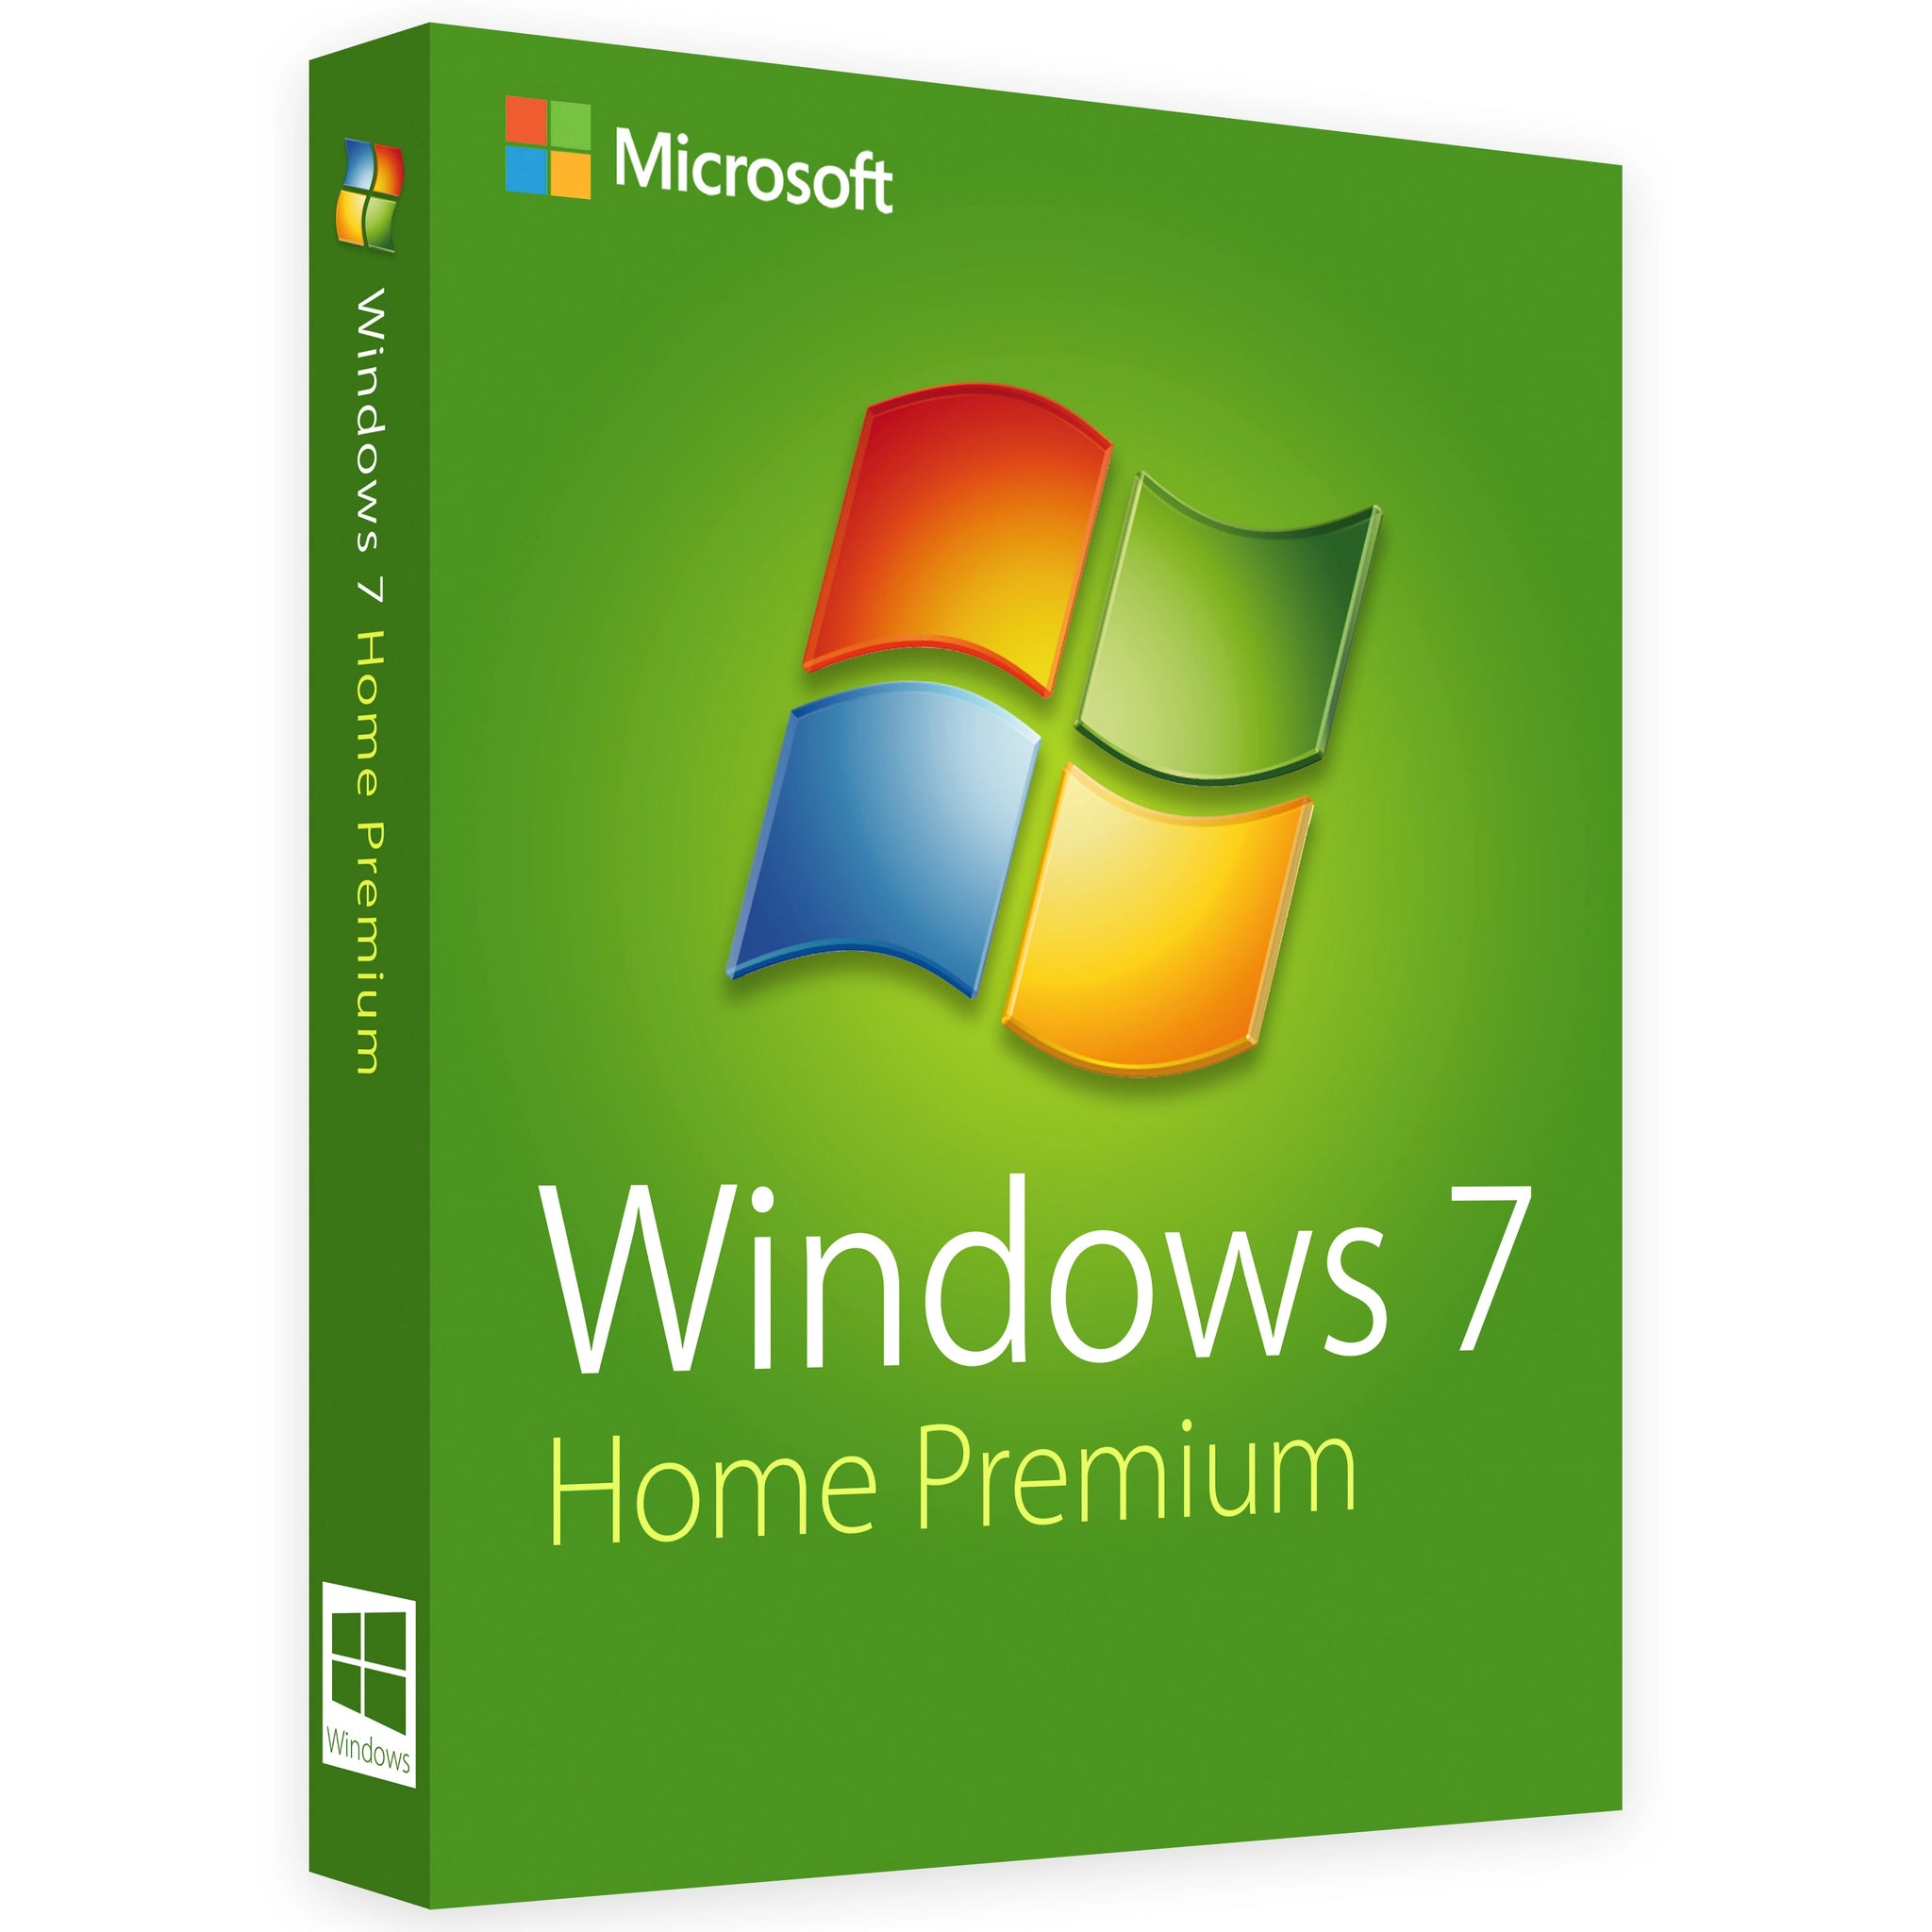 Microsoft Windows 7 Home Premium - Lifetime License Key for 1 PC